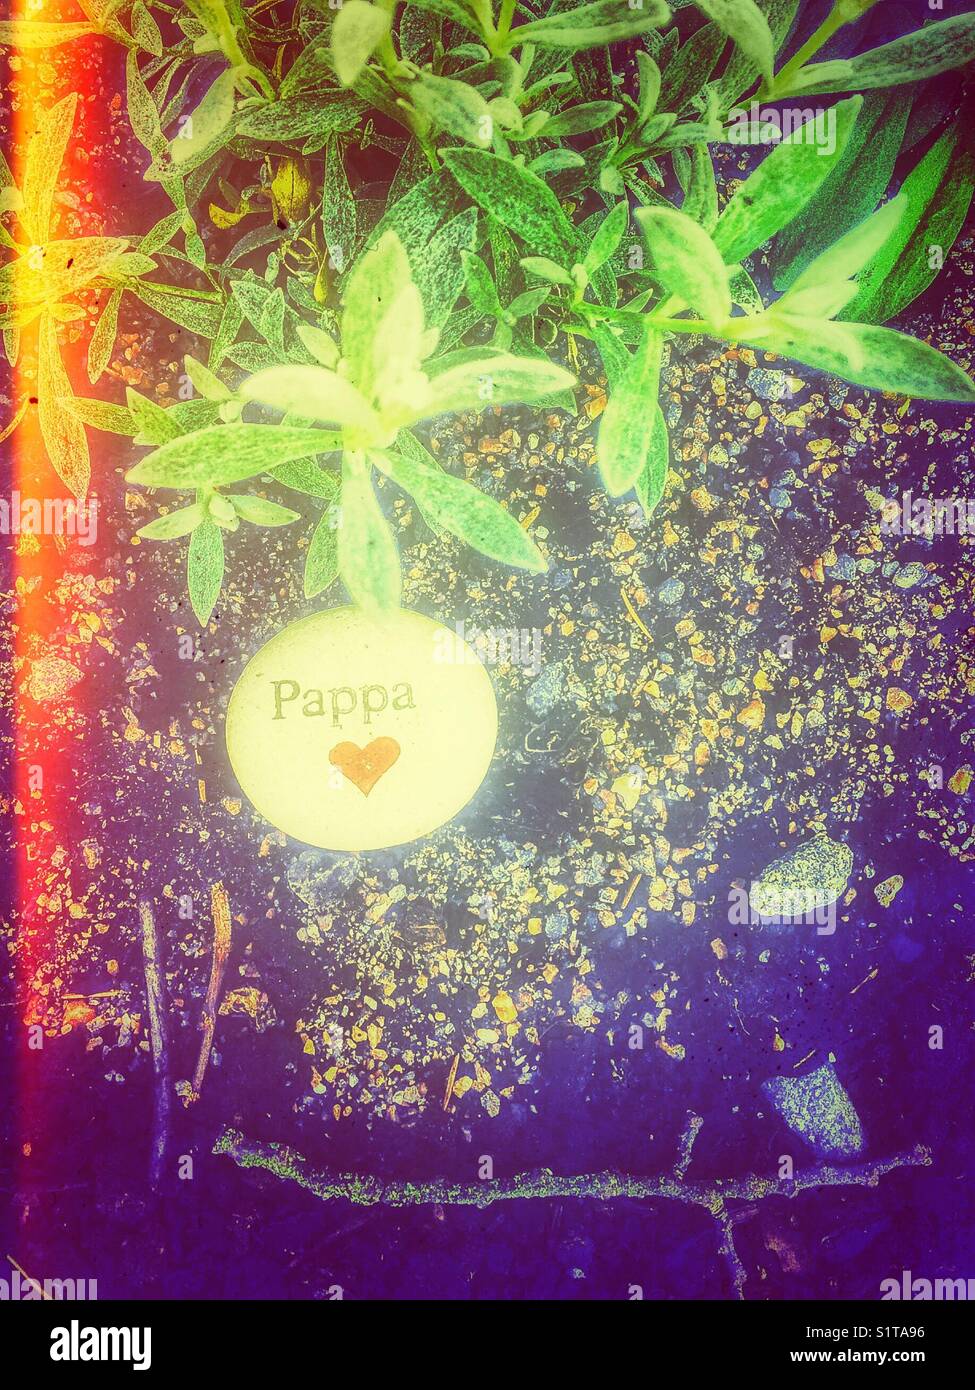 Pappa written on pebble on grave, Sweden Stock Photo